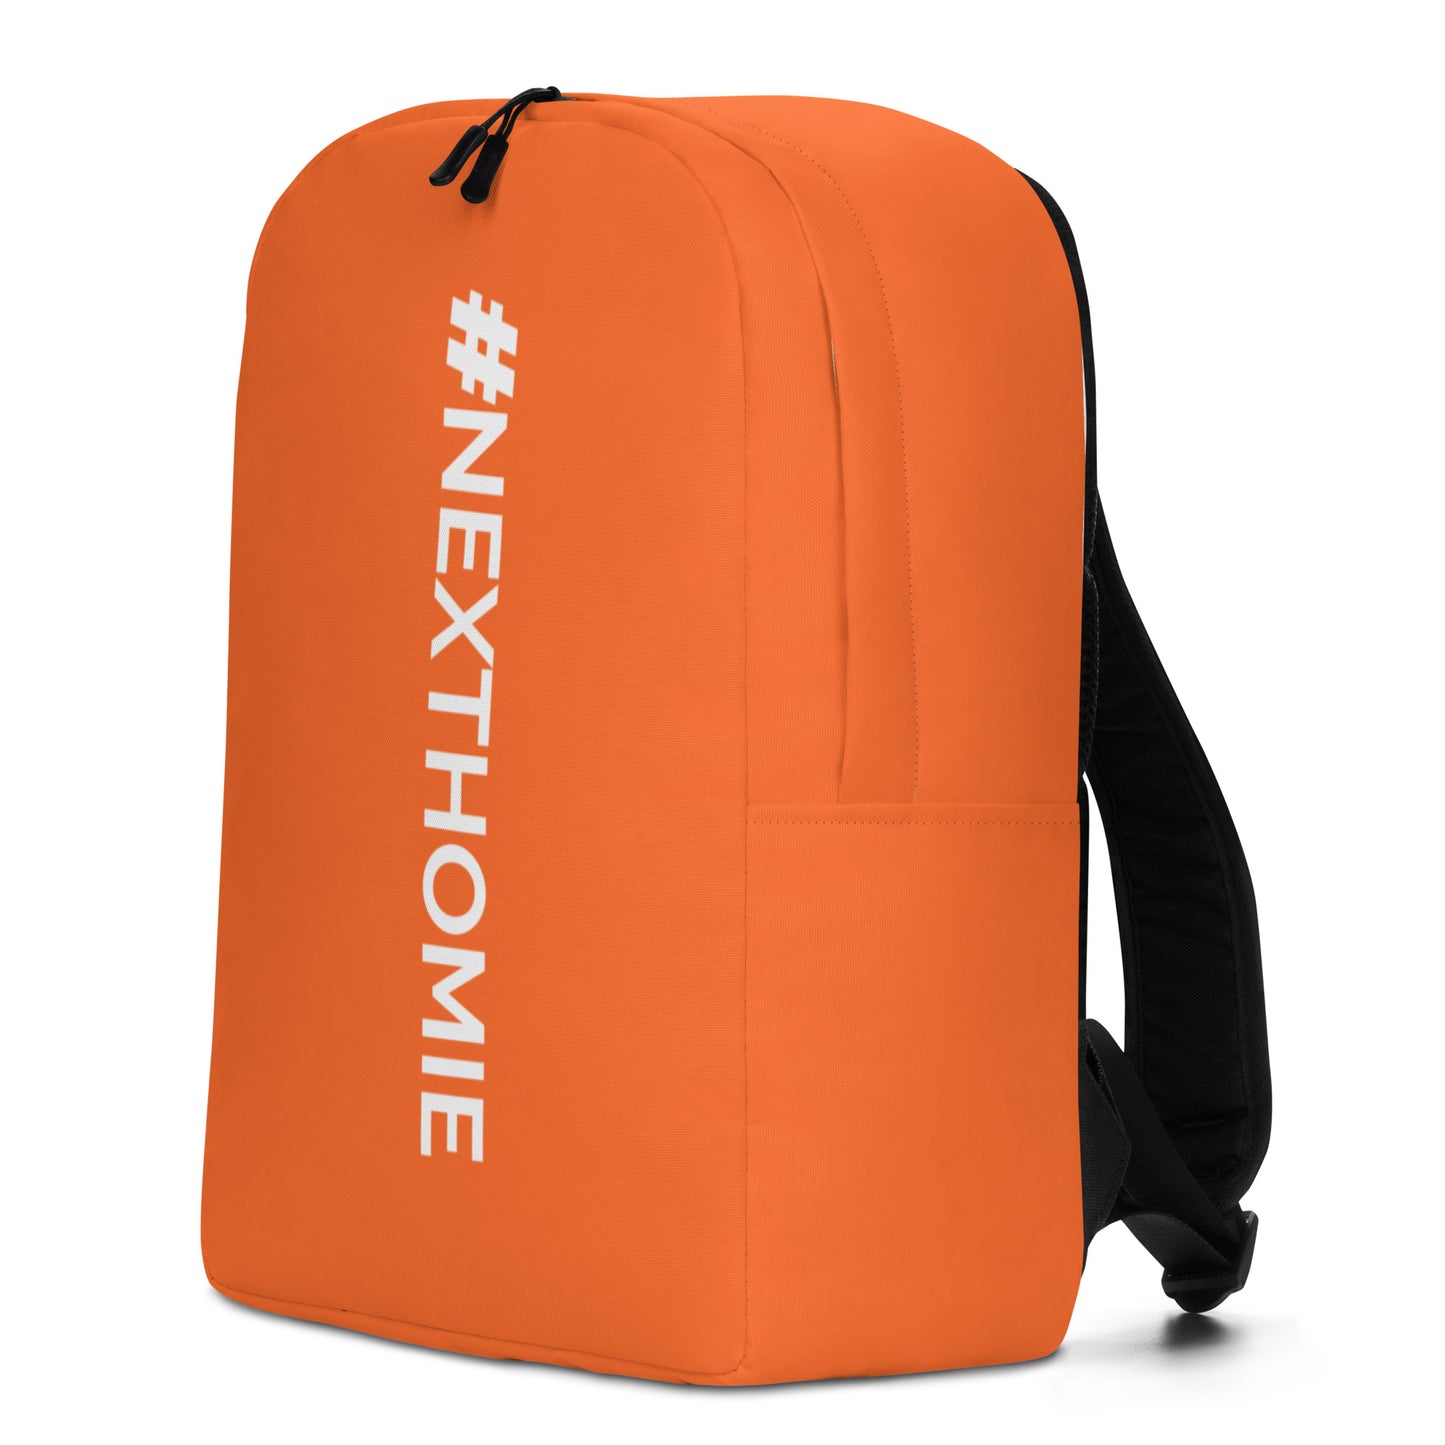 NextHomie Minimalist Backpack